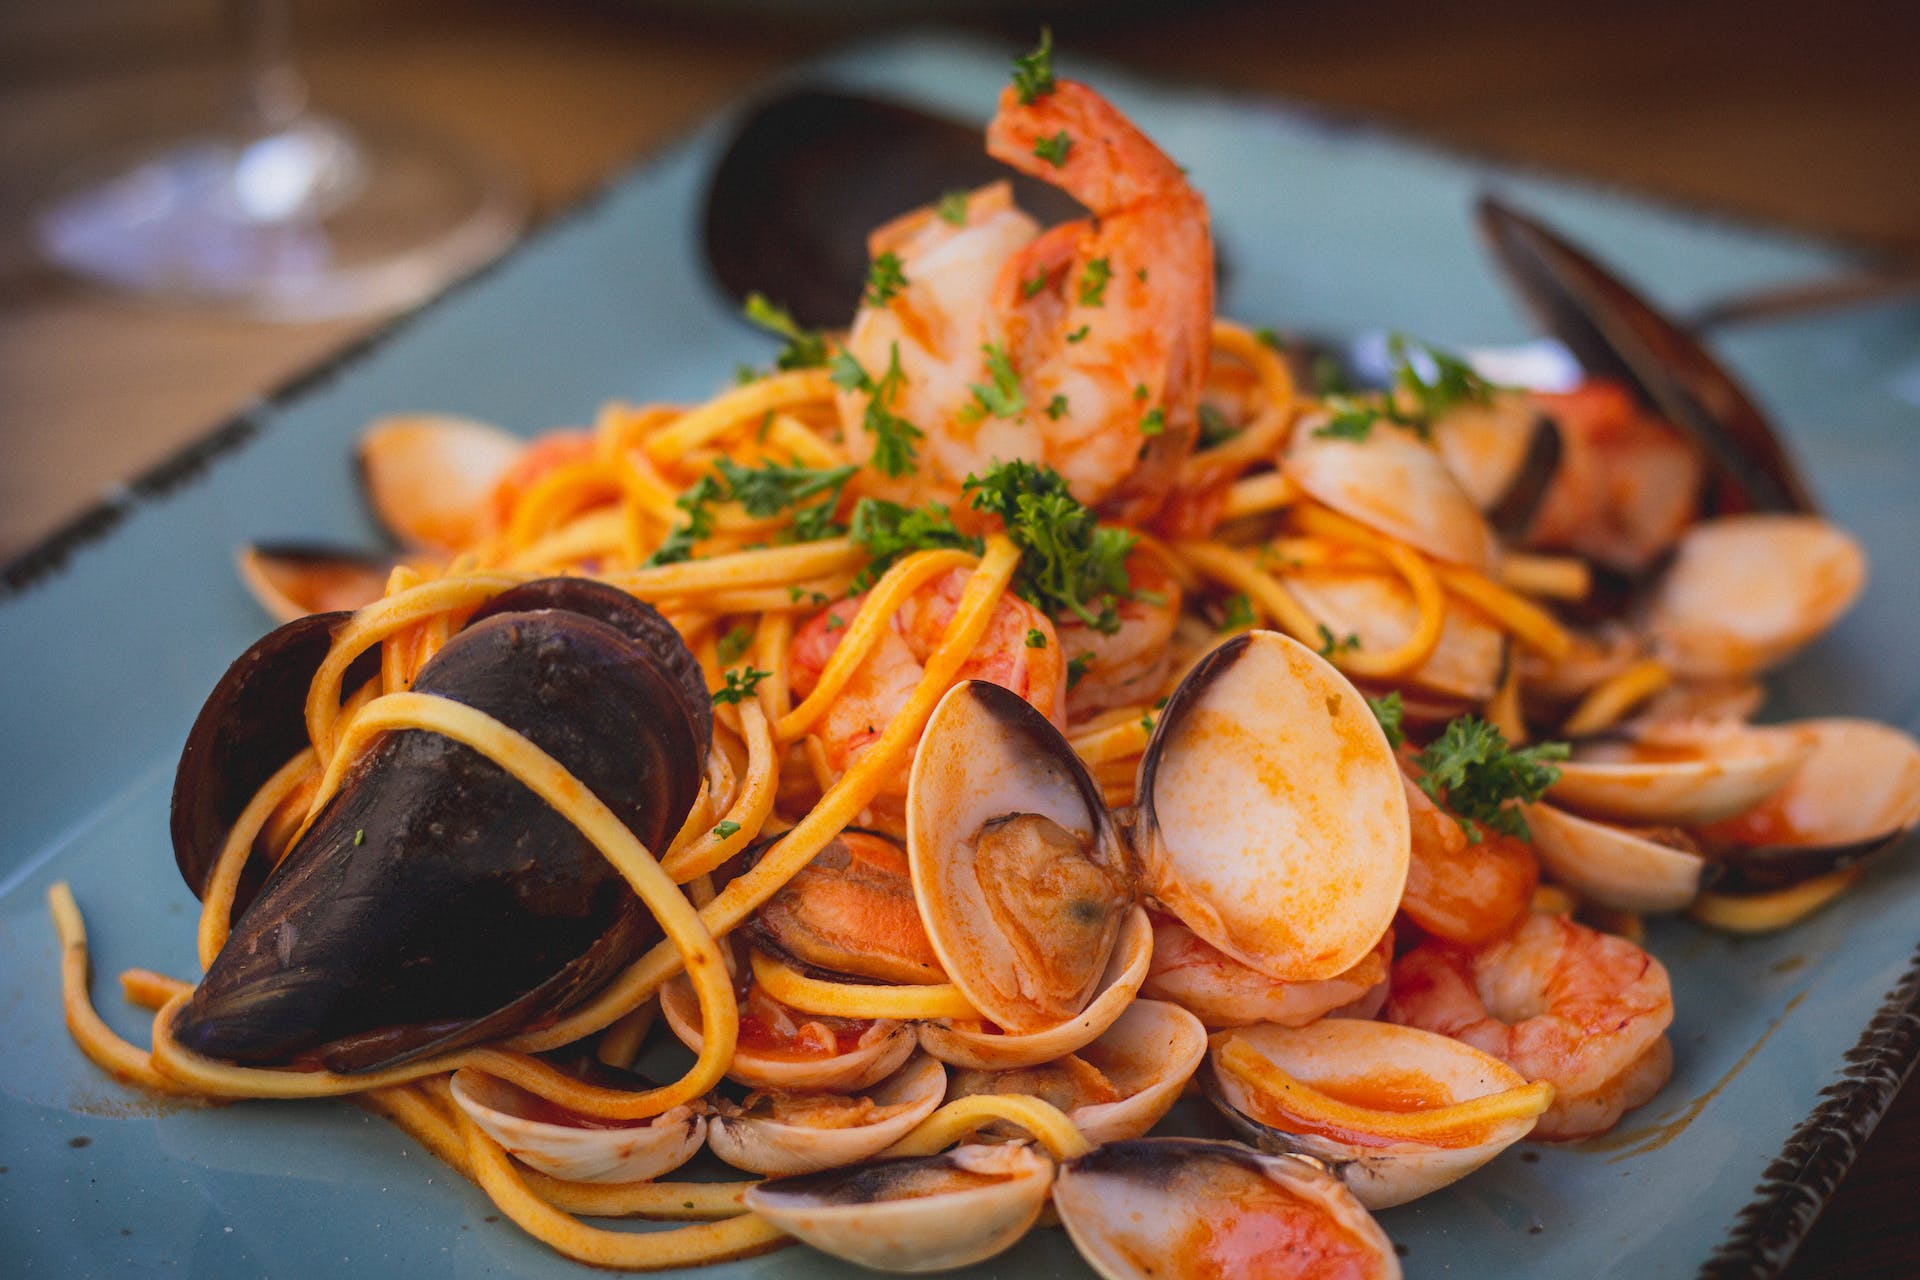 Spaghetti with shellfish | Source: Pexels